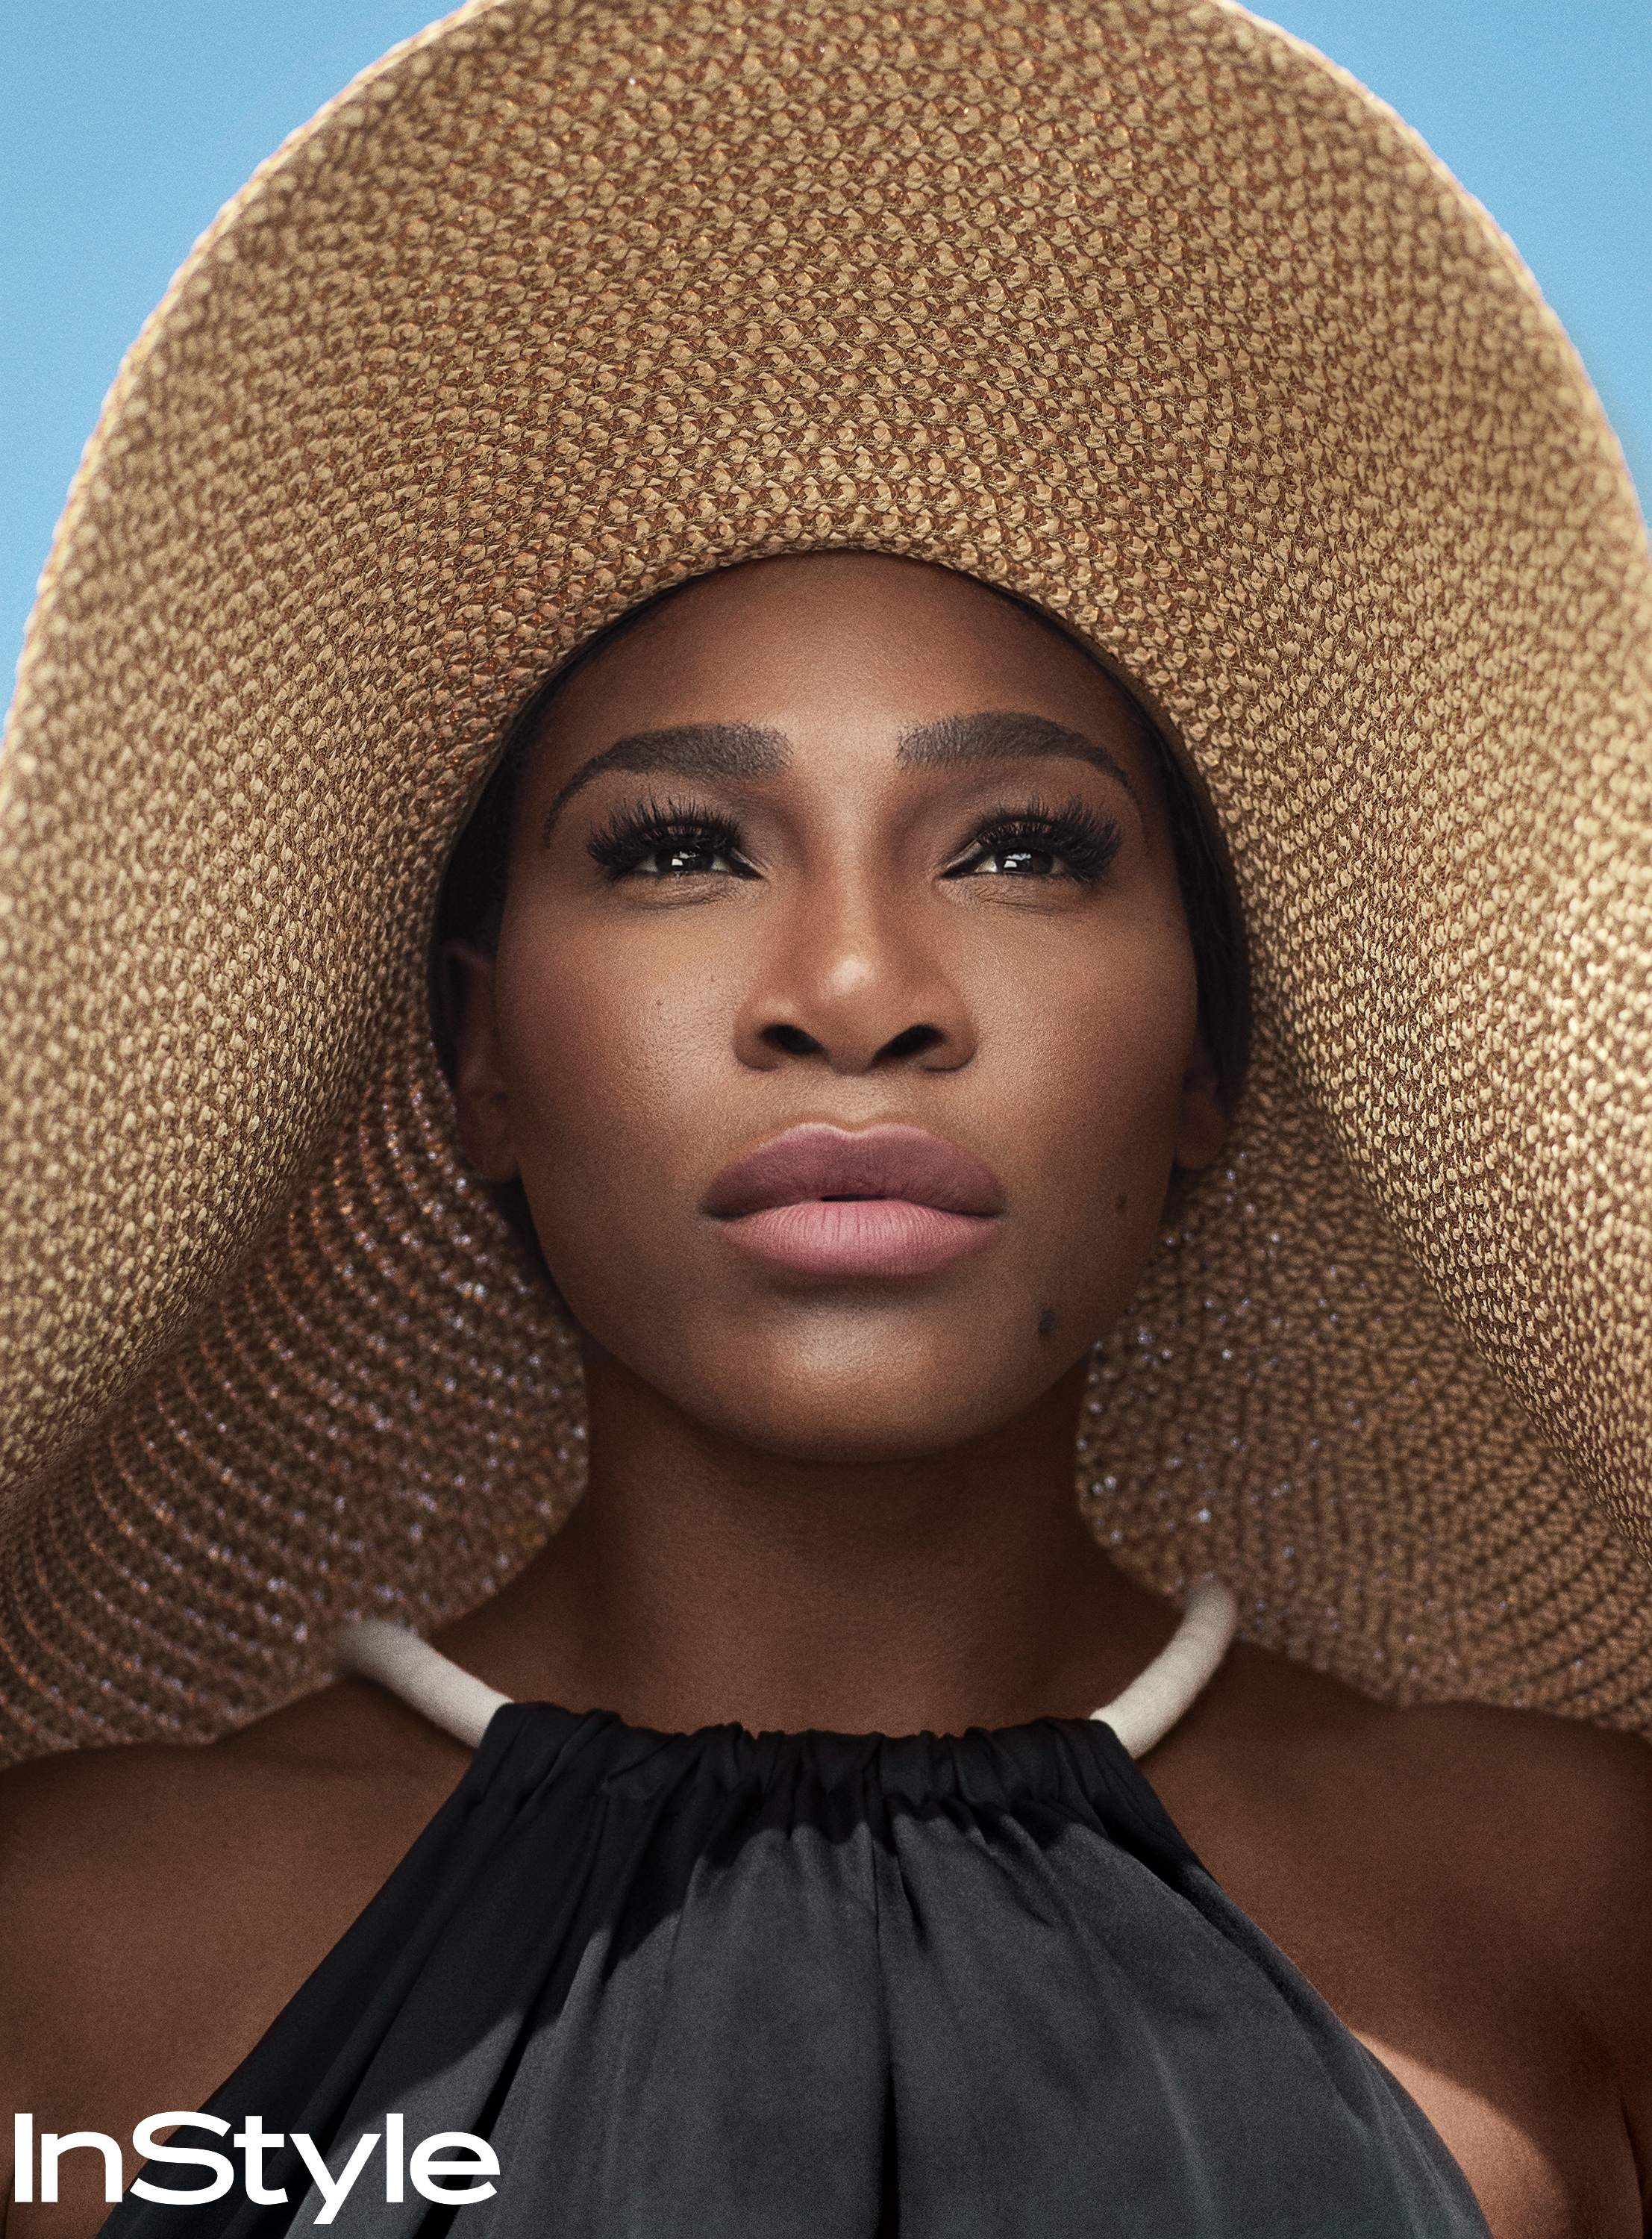 Serena Williams for InStyle magazine's Badass Women